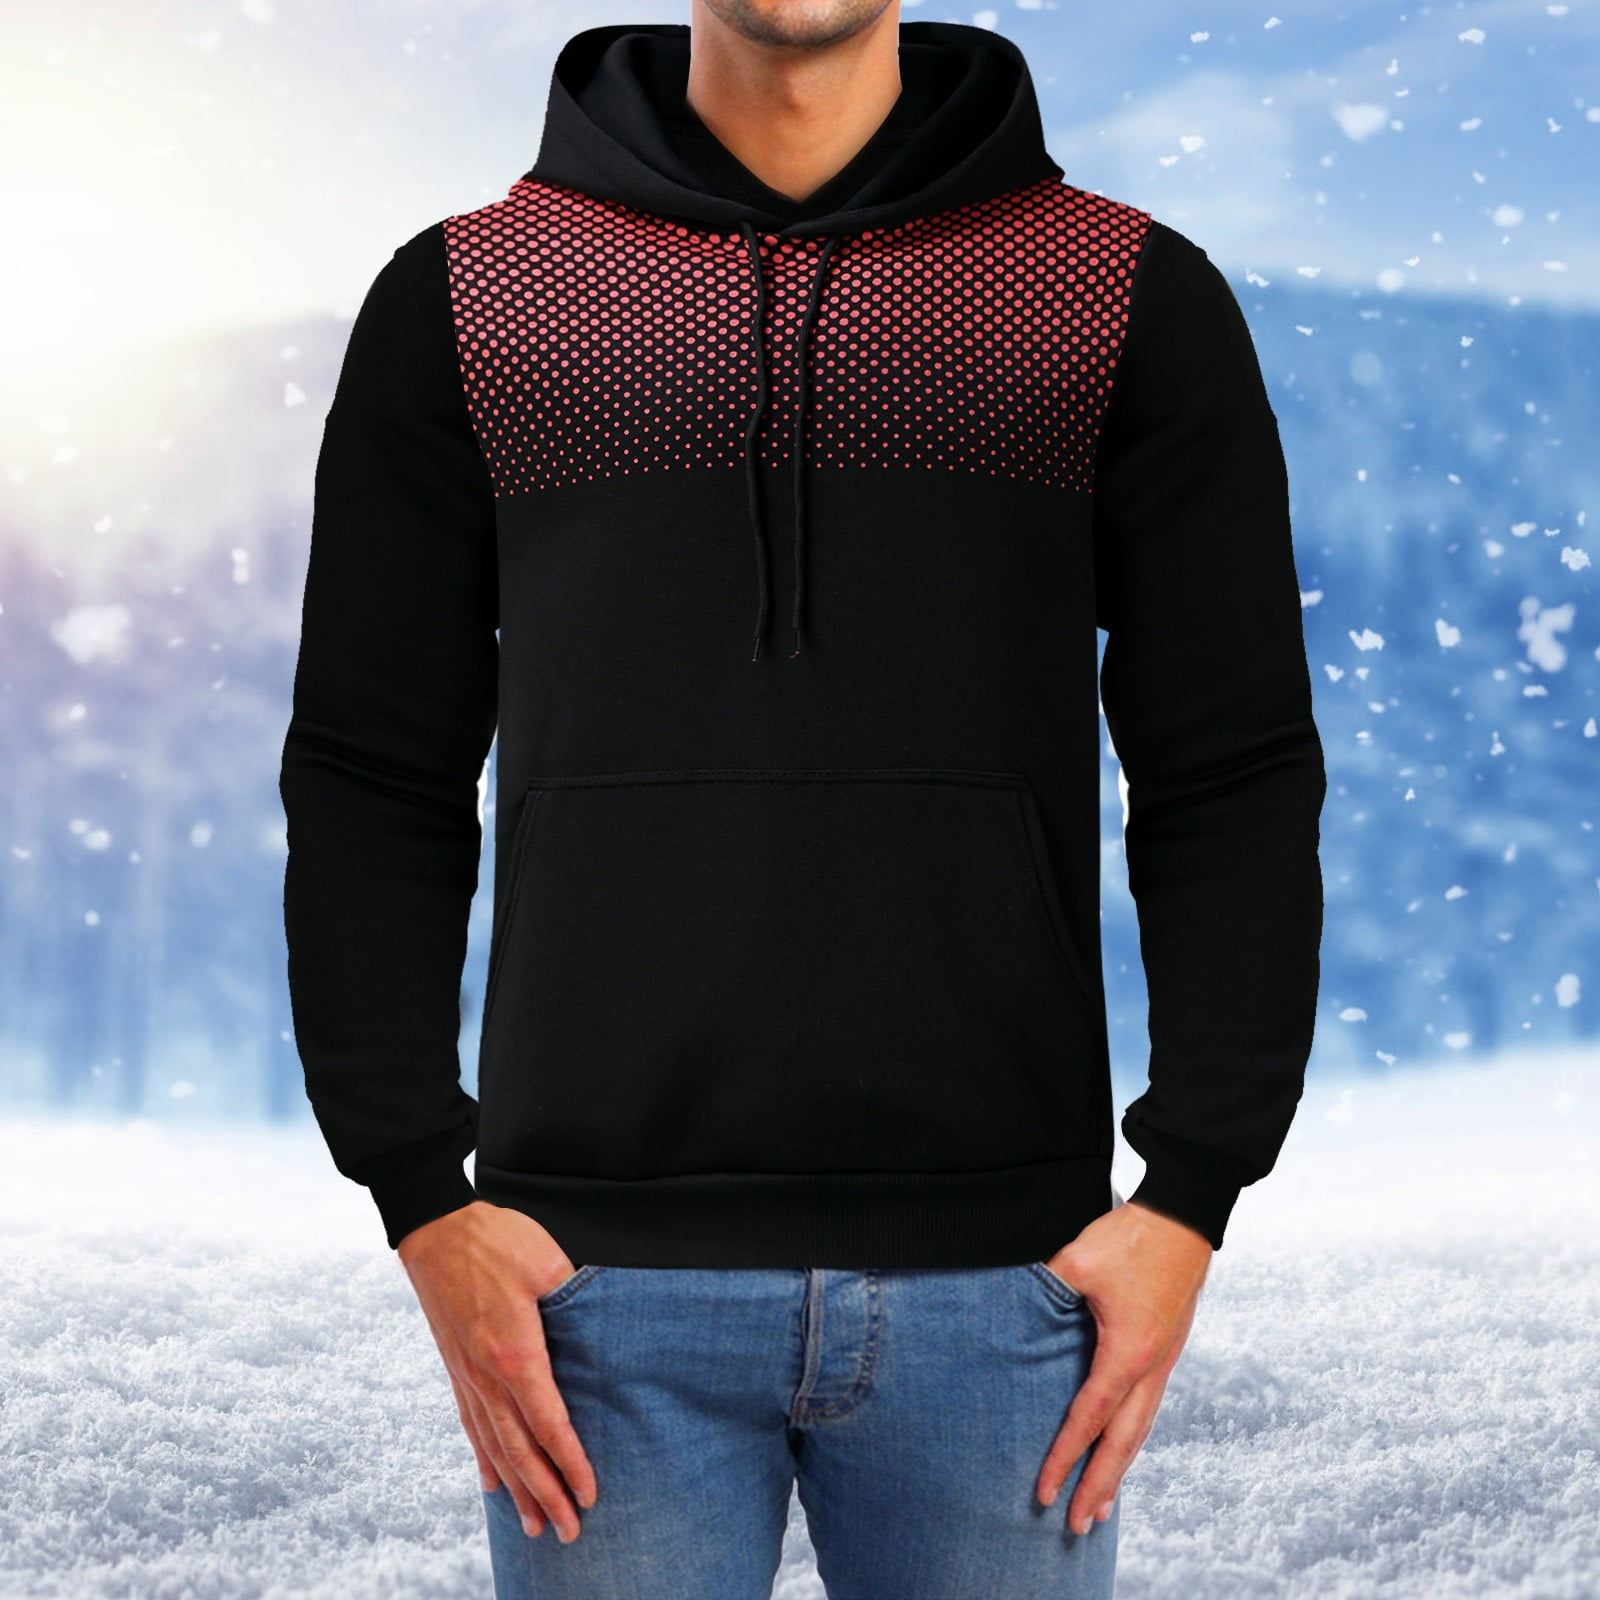 LEEy-world Hoodies For Men Men's Hoodies Fully Sherpa Lined Zip Up  Sweatshirts Heavy Thick Jacket Warm Winter Workout Pullover Black,XXL 